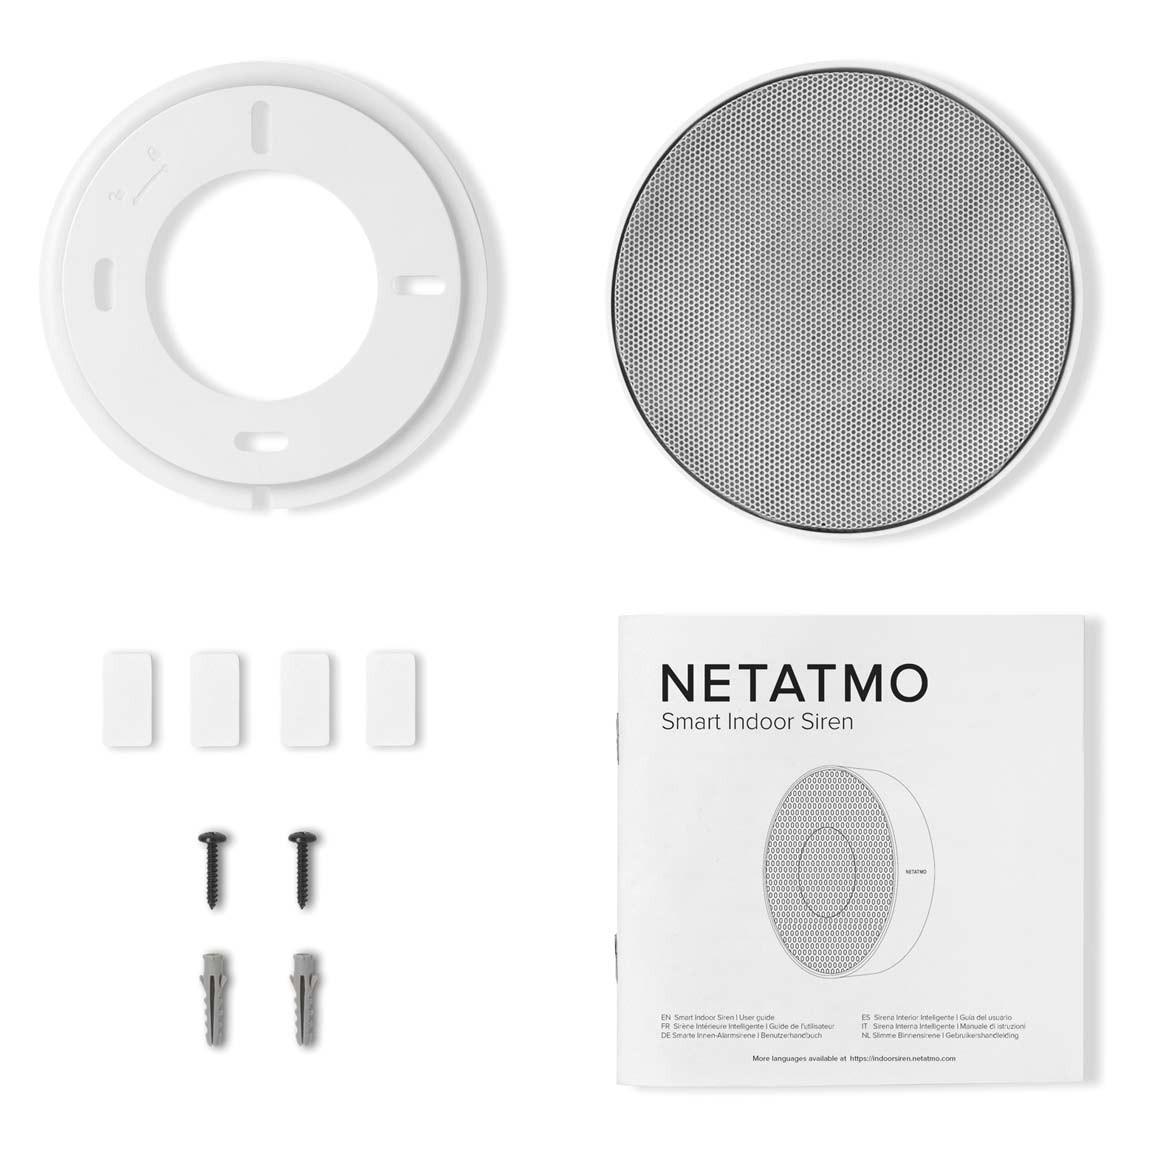 Netatmo Smarte Innen-Alarmsirene - Weiß lieferumfang